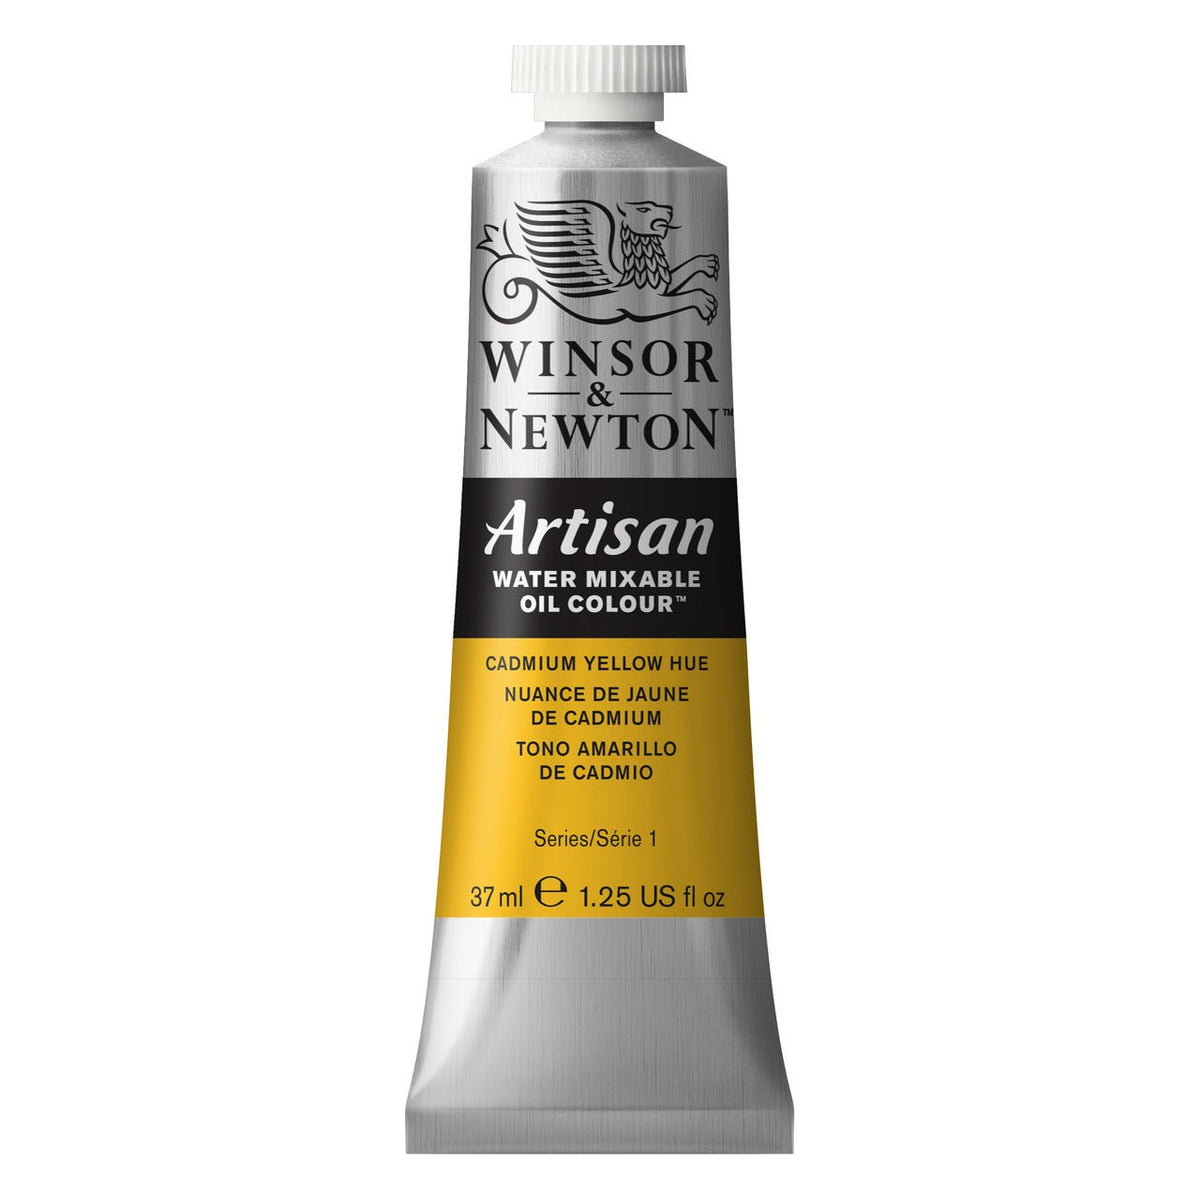 Winsor & Newton Artisan Water Mixable Oil 37ml - Cadmium Yellow Hue - merriartist.com